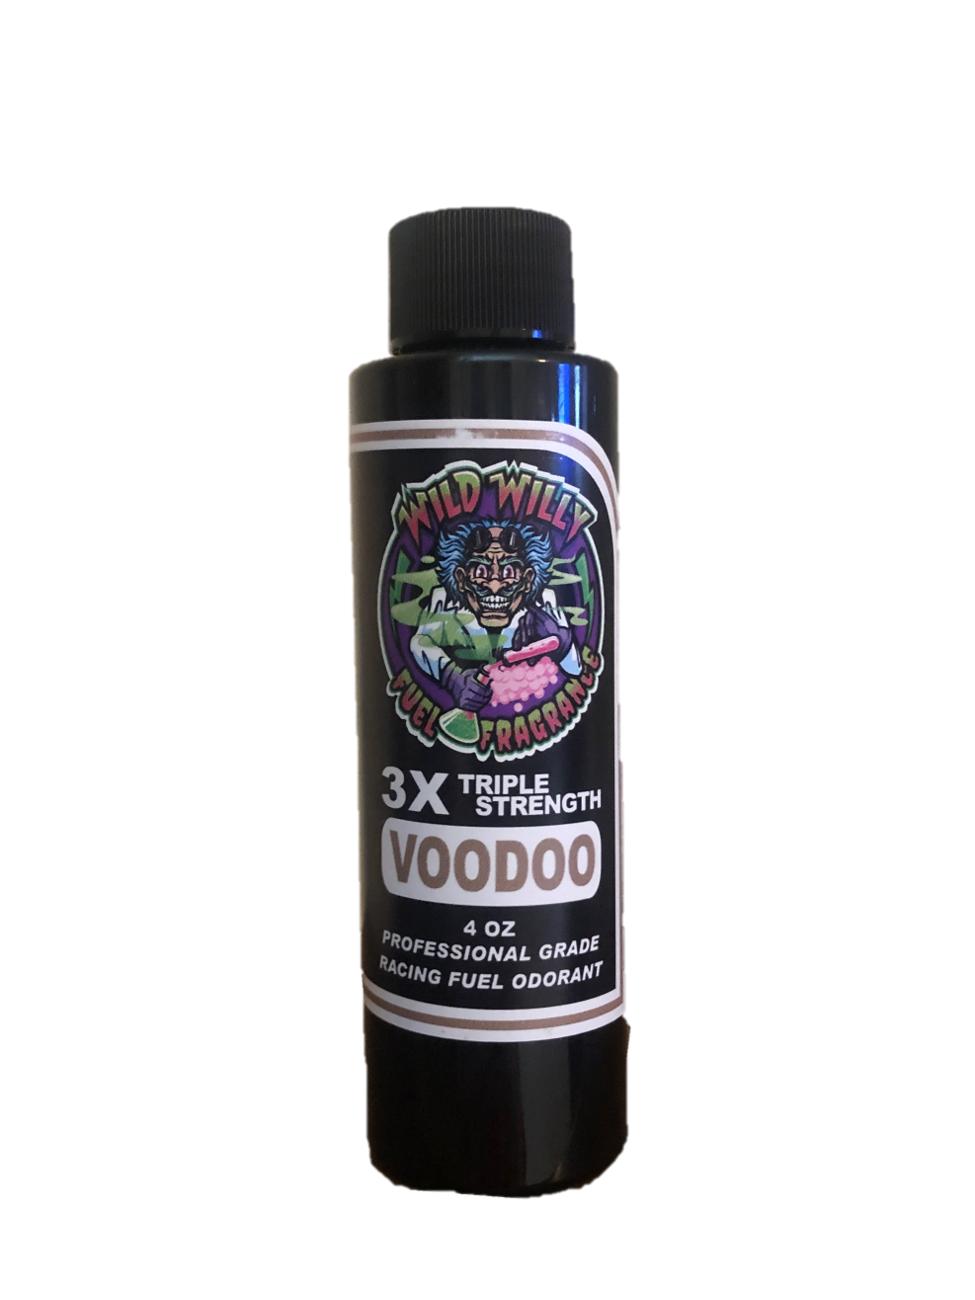 Voodoo - Wild Willy Fuel Fragrance - 3X Triple Strength!